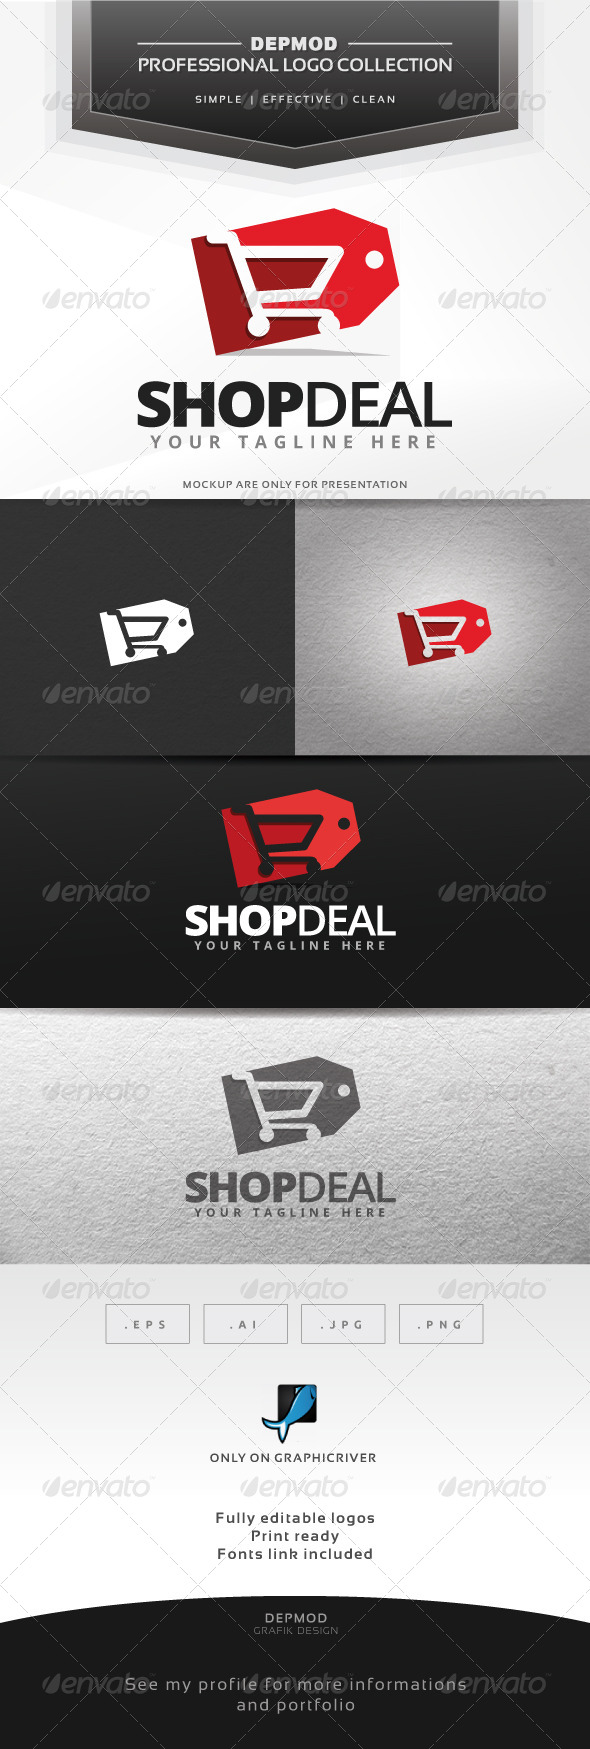 Shop Deal Logo